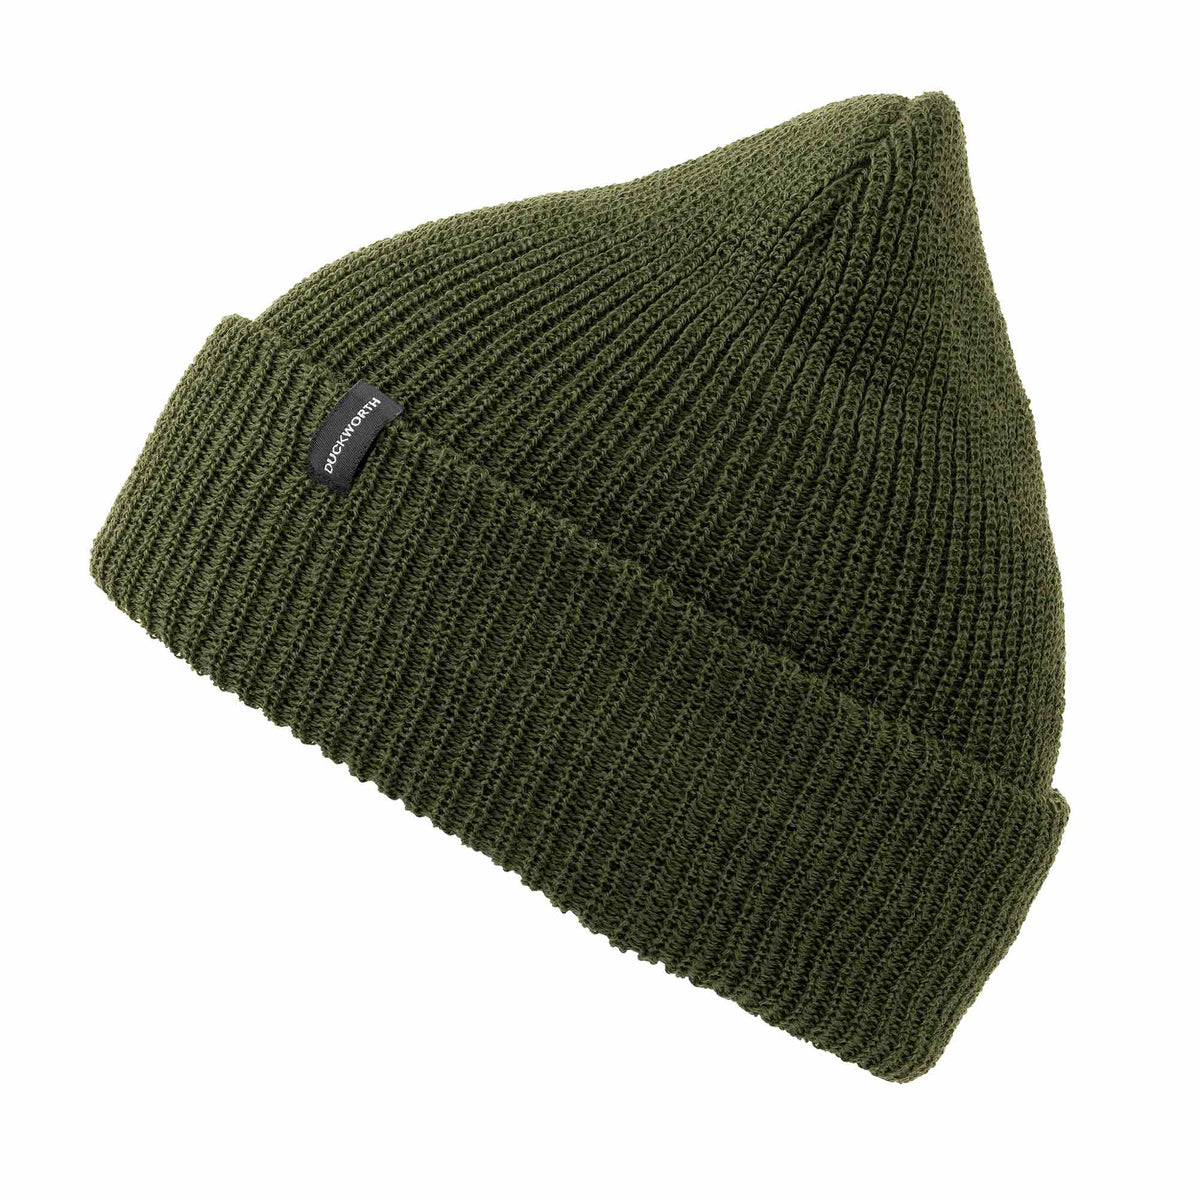 Unisex Hat Military Men Caps Fleece Hats Warmming Cap Winter Hiking  Accessories